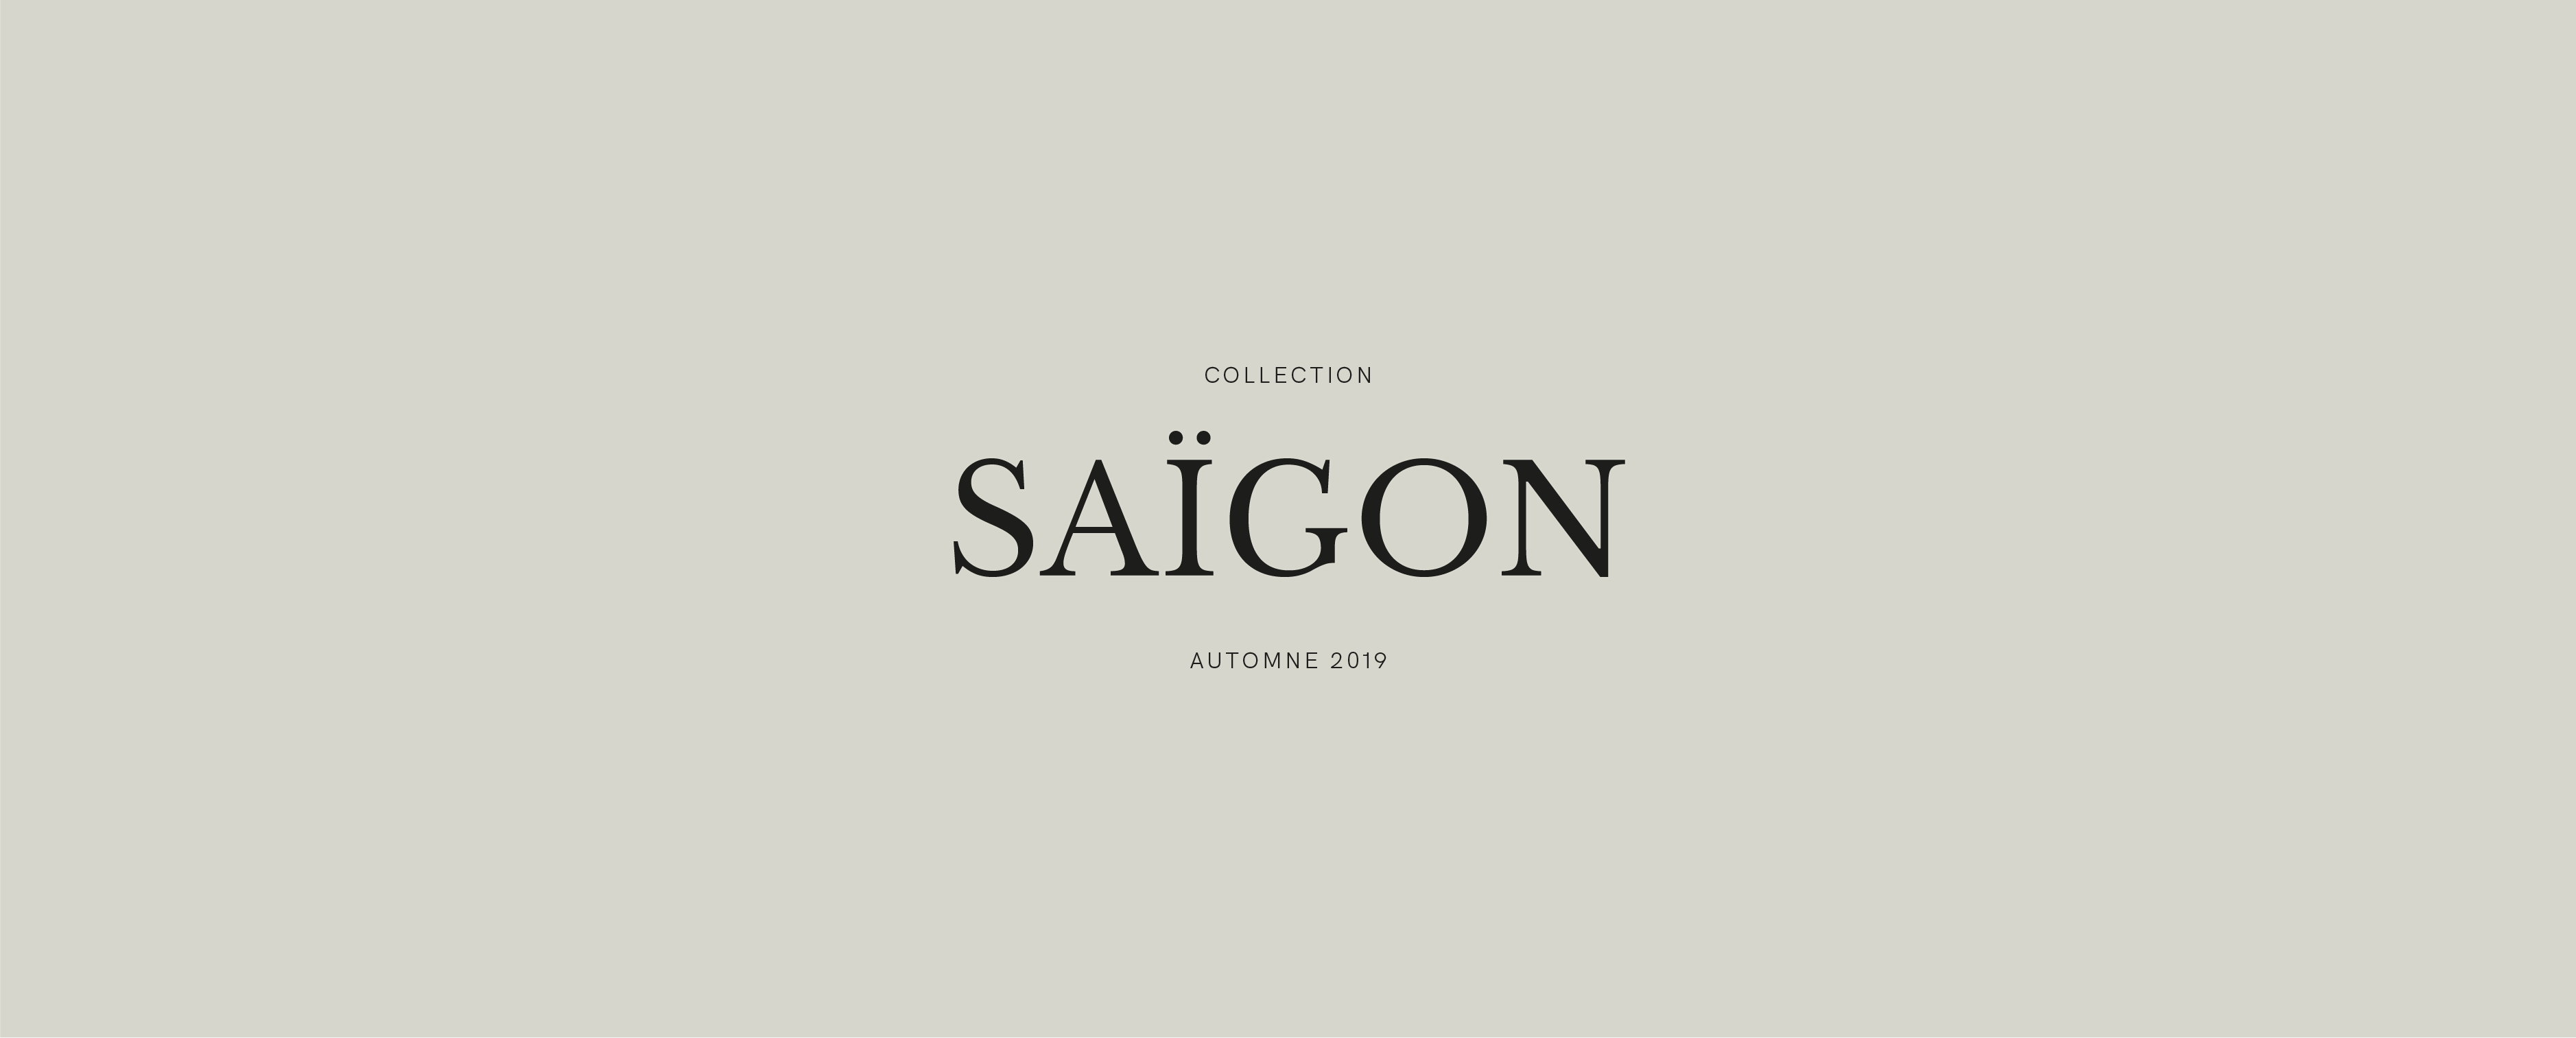 Alinea collection automne Saigon